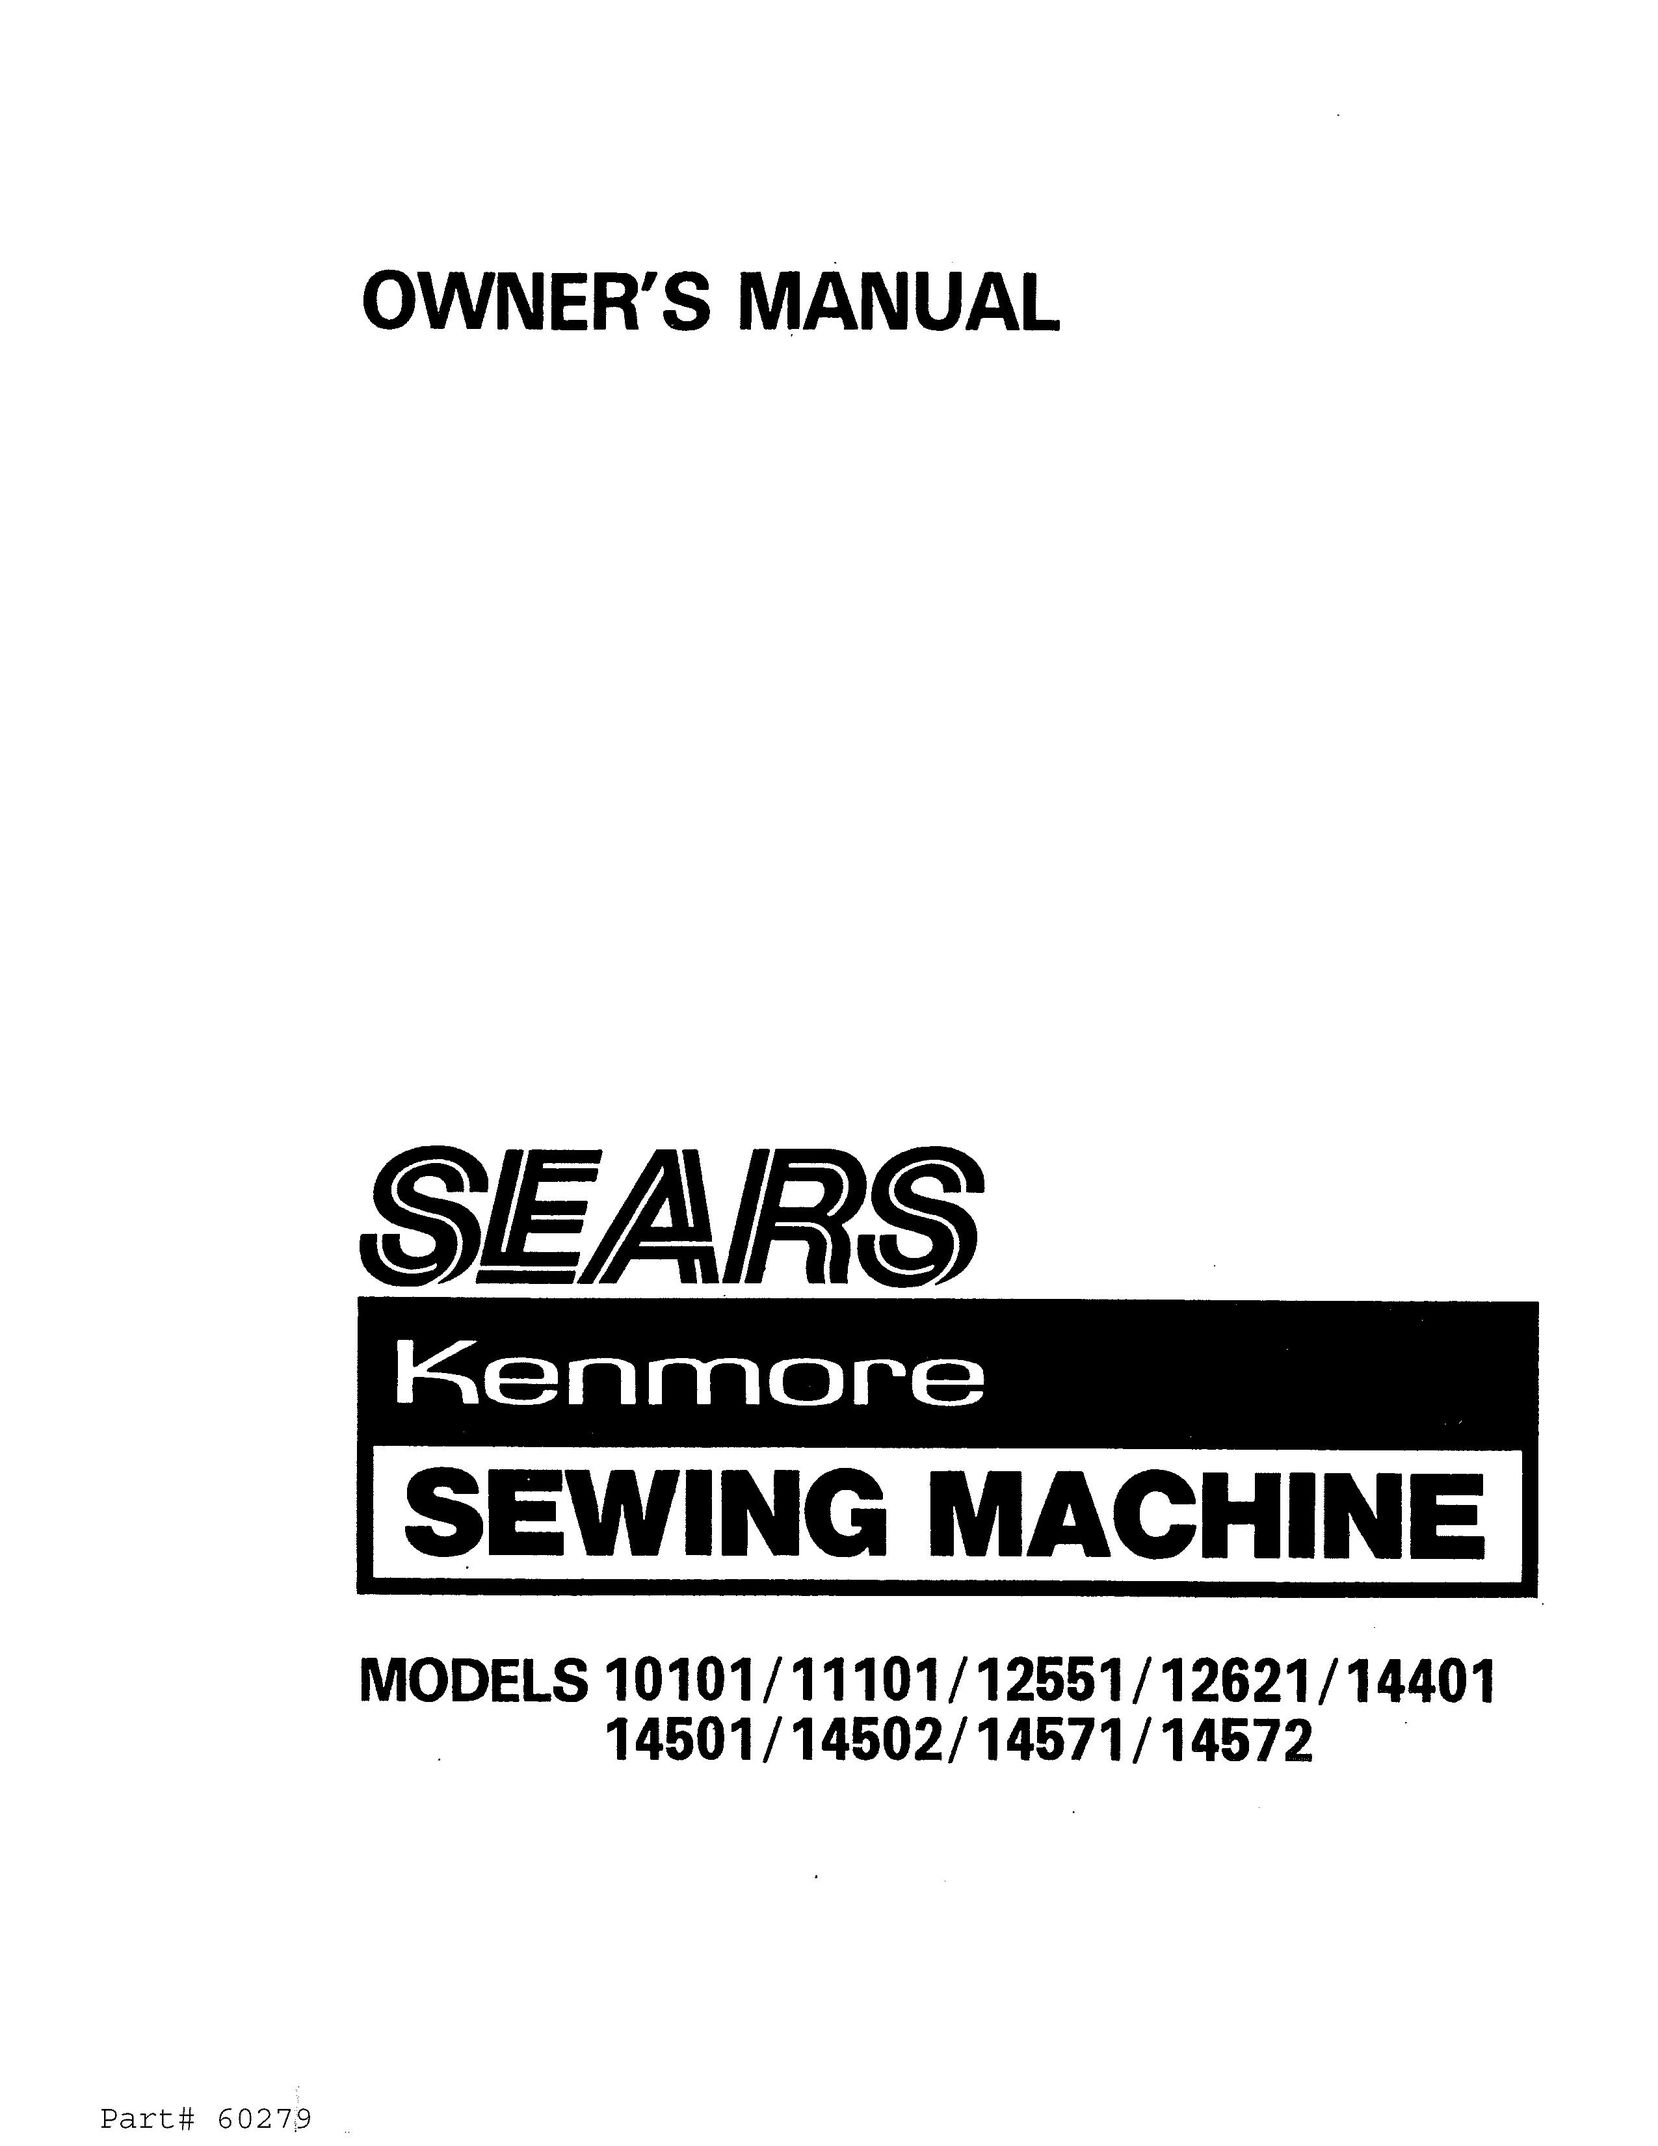 Kenmore 14401 Sewing Machine User Manual